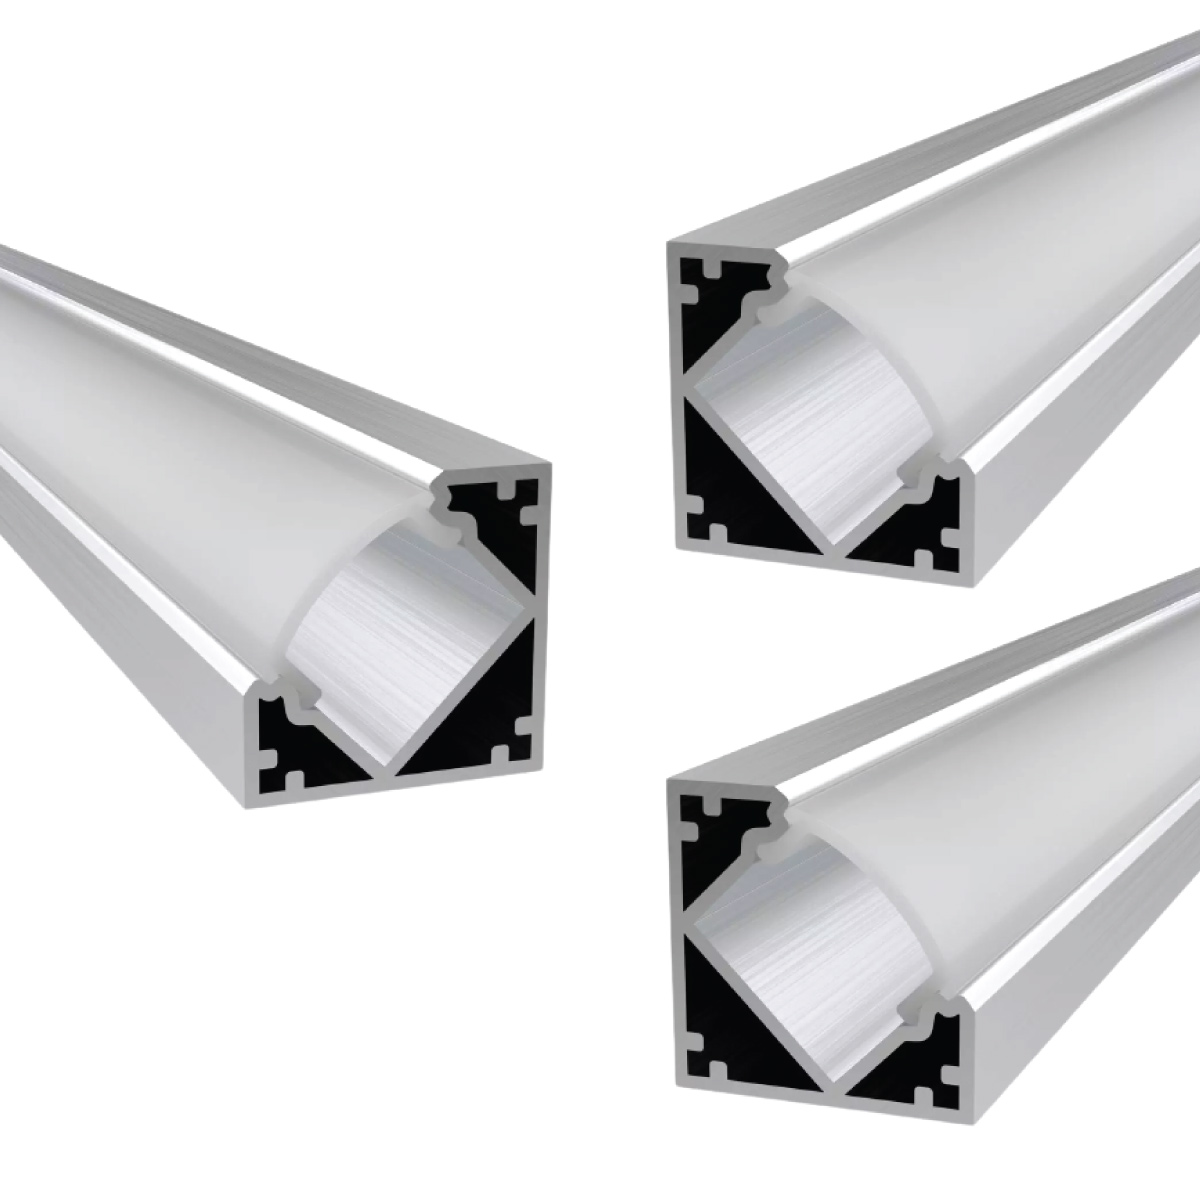 View Pack of 3 Corner Aluminium LED Profiles Angled 45 Degree 1M information